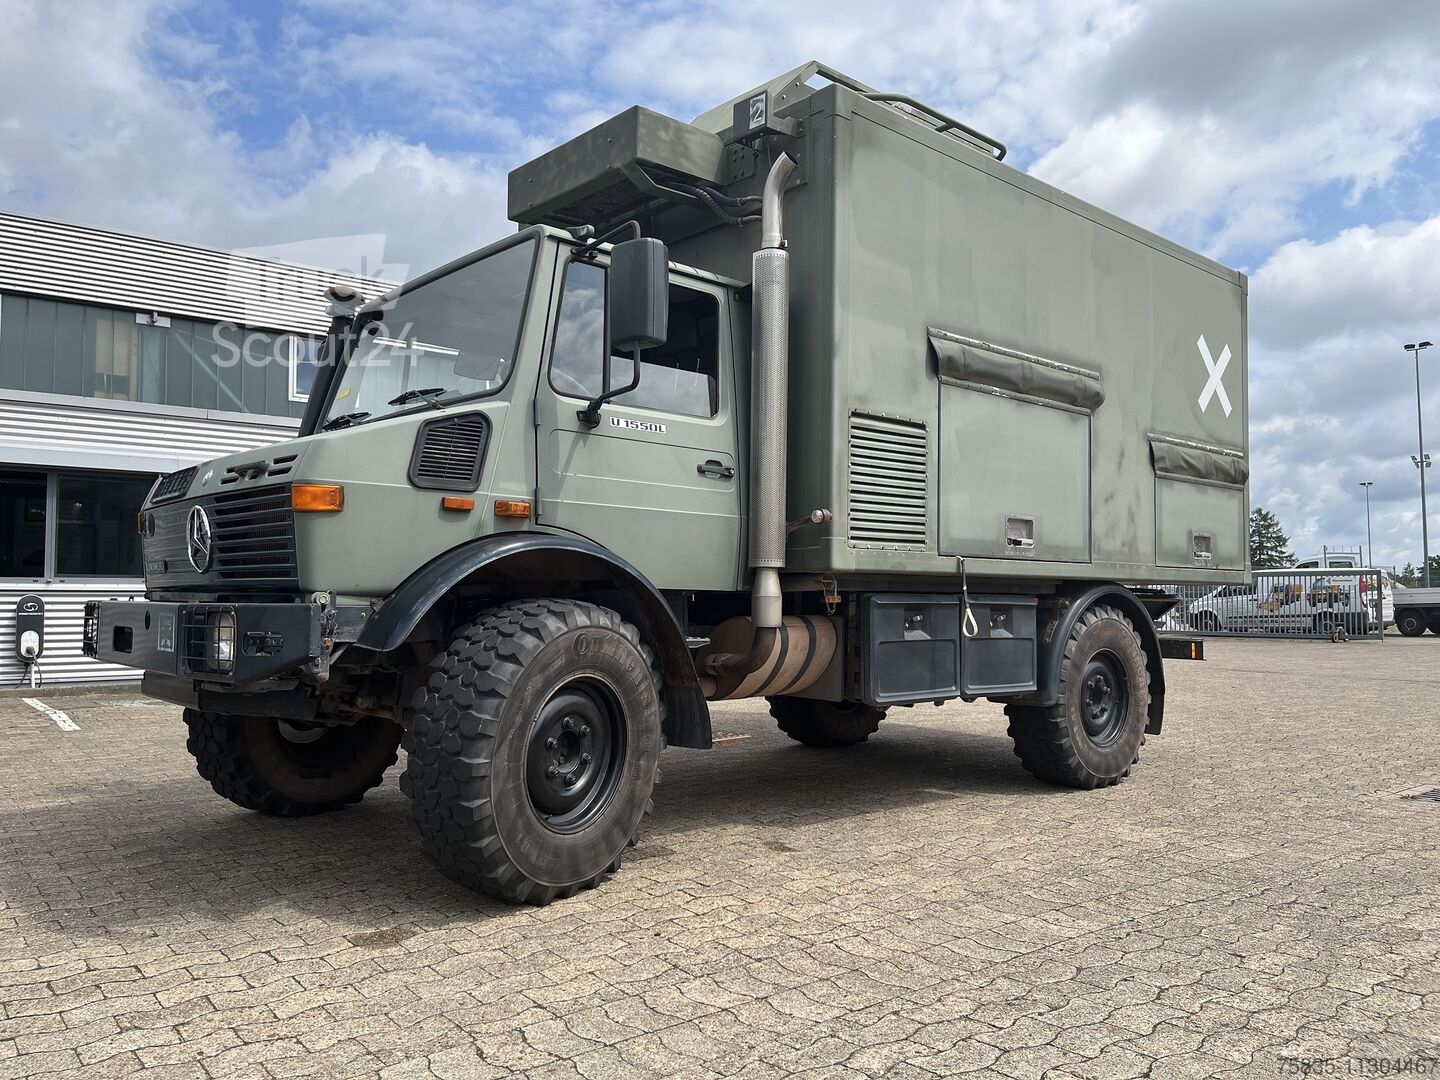 Unimog Unimog U 1550 L37 Ex Bundeswehr Regiefahrzeug Expeditionsmobil (ggf  mit Splittgetriebe) buy used - Offer on TruckScout24